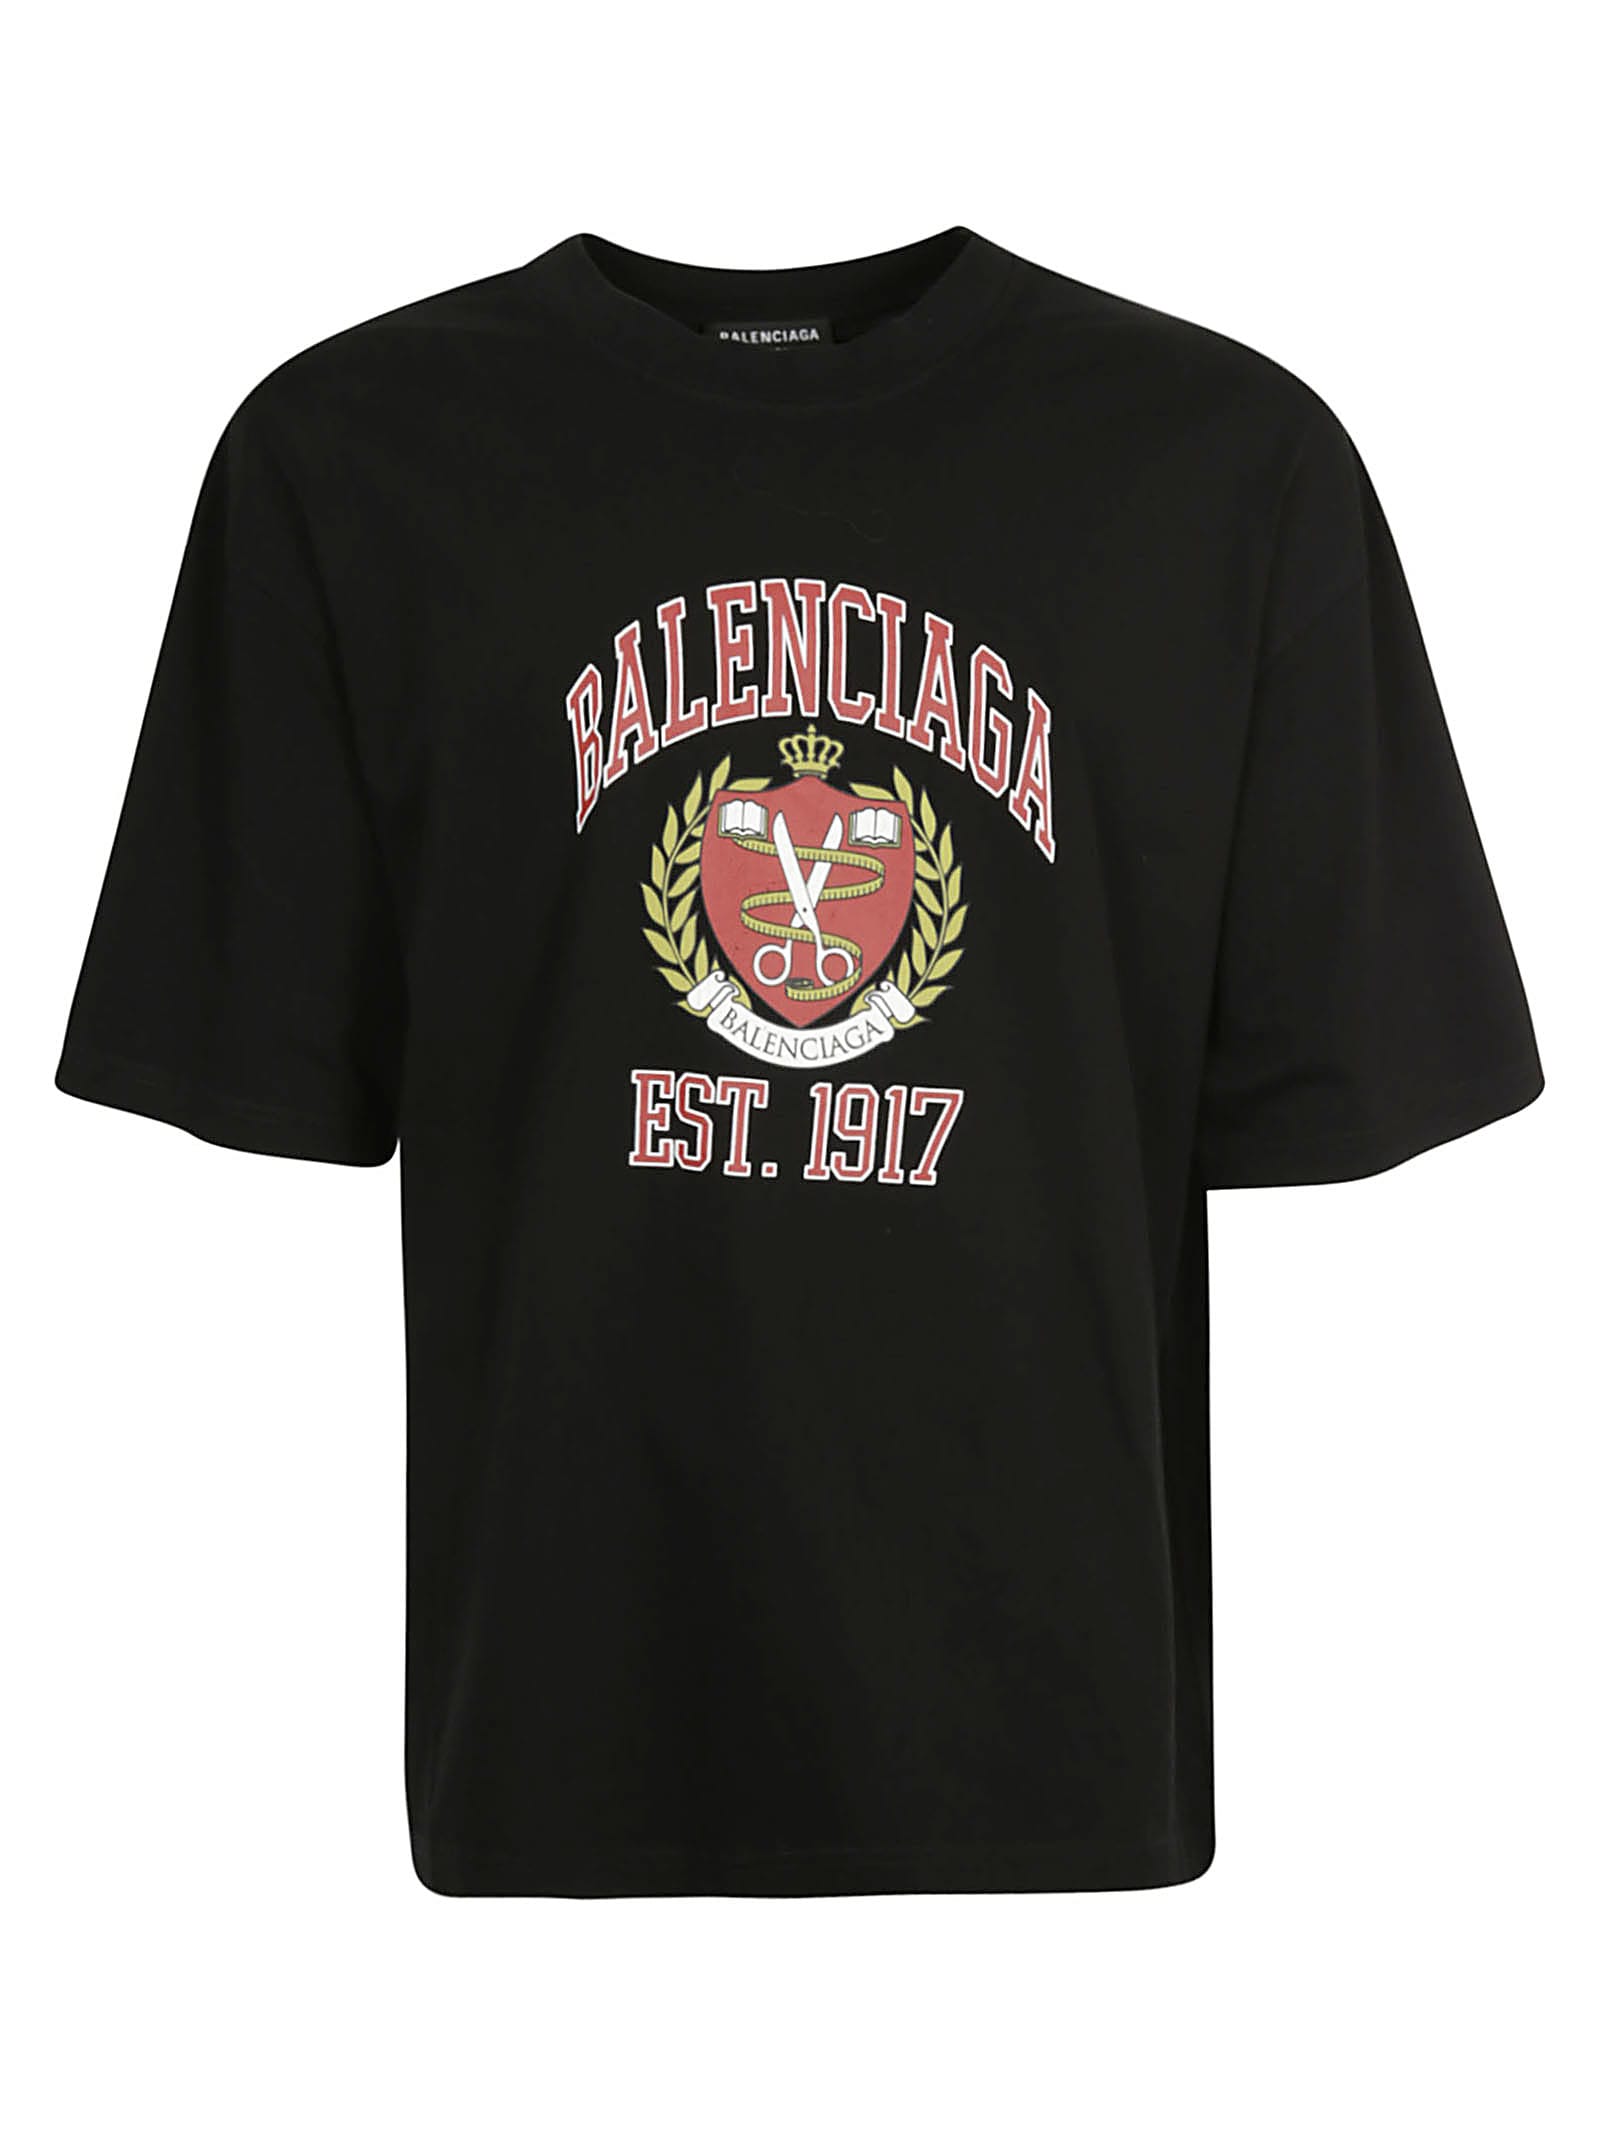 Balenciaga Est. 1917 T-shirt